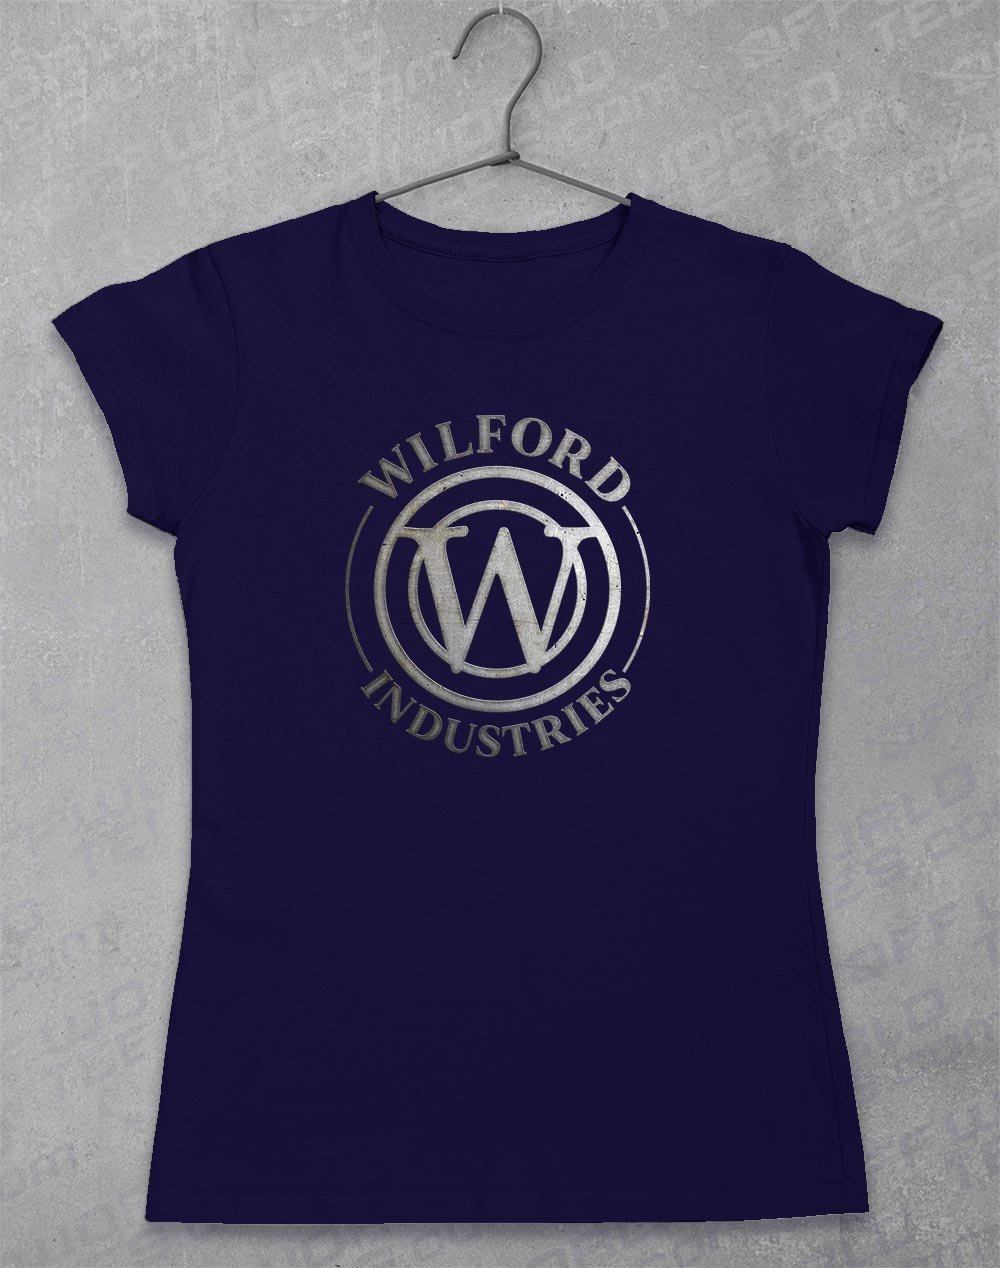 Wilford Industries Women's T-Shirt 8-10 / Navy  - Off World Tees